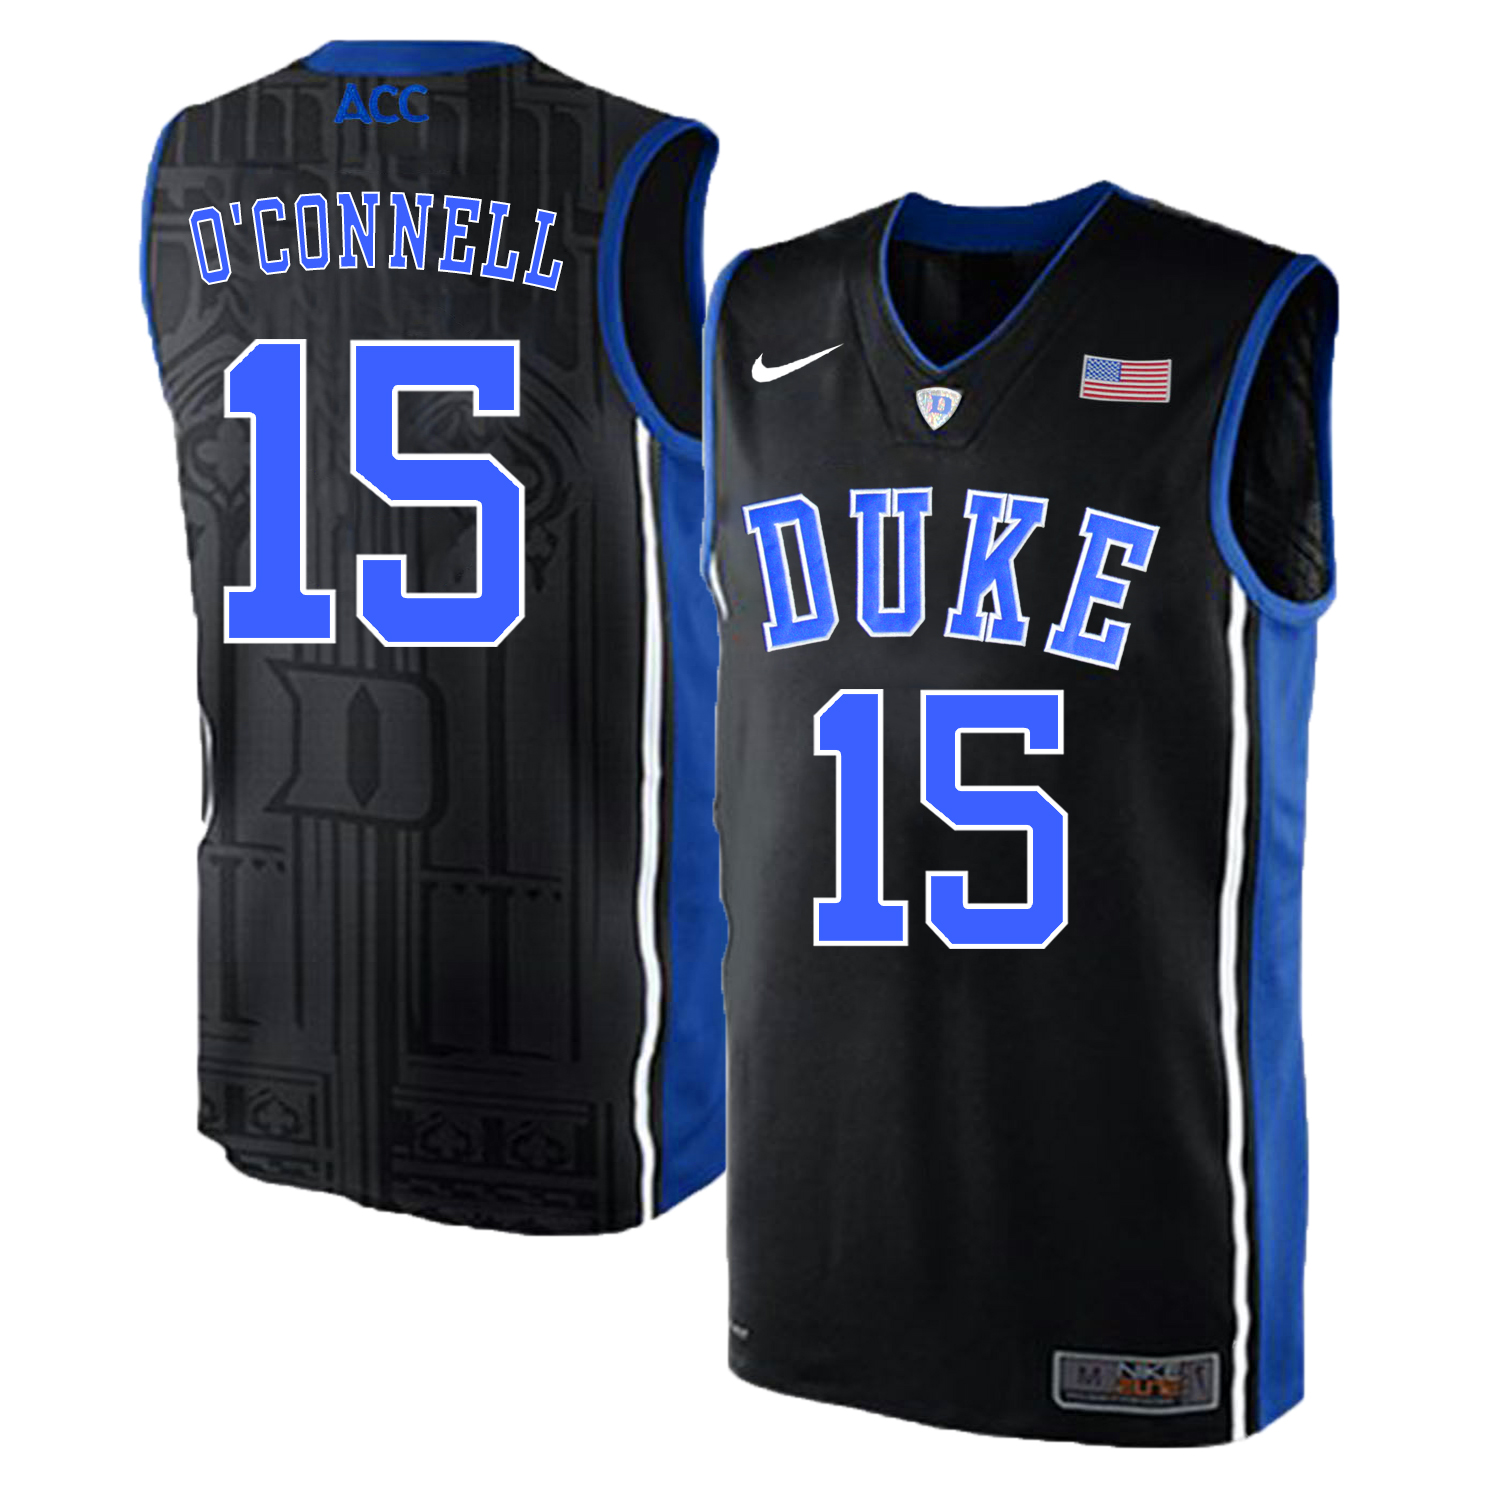 Duke Blue Devils 15 Alex O'Connell Black Elite Nike College Basketball Jersey